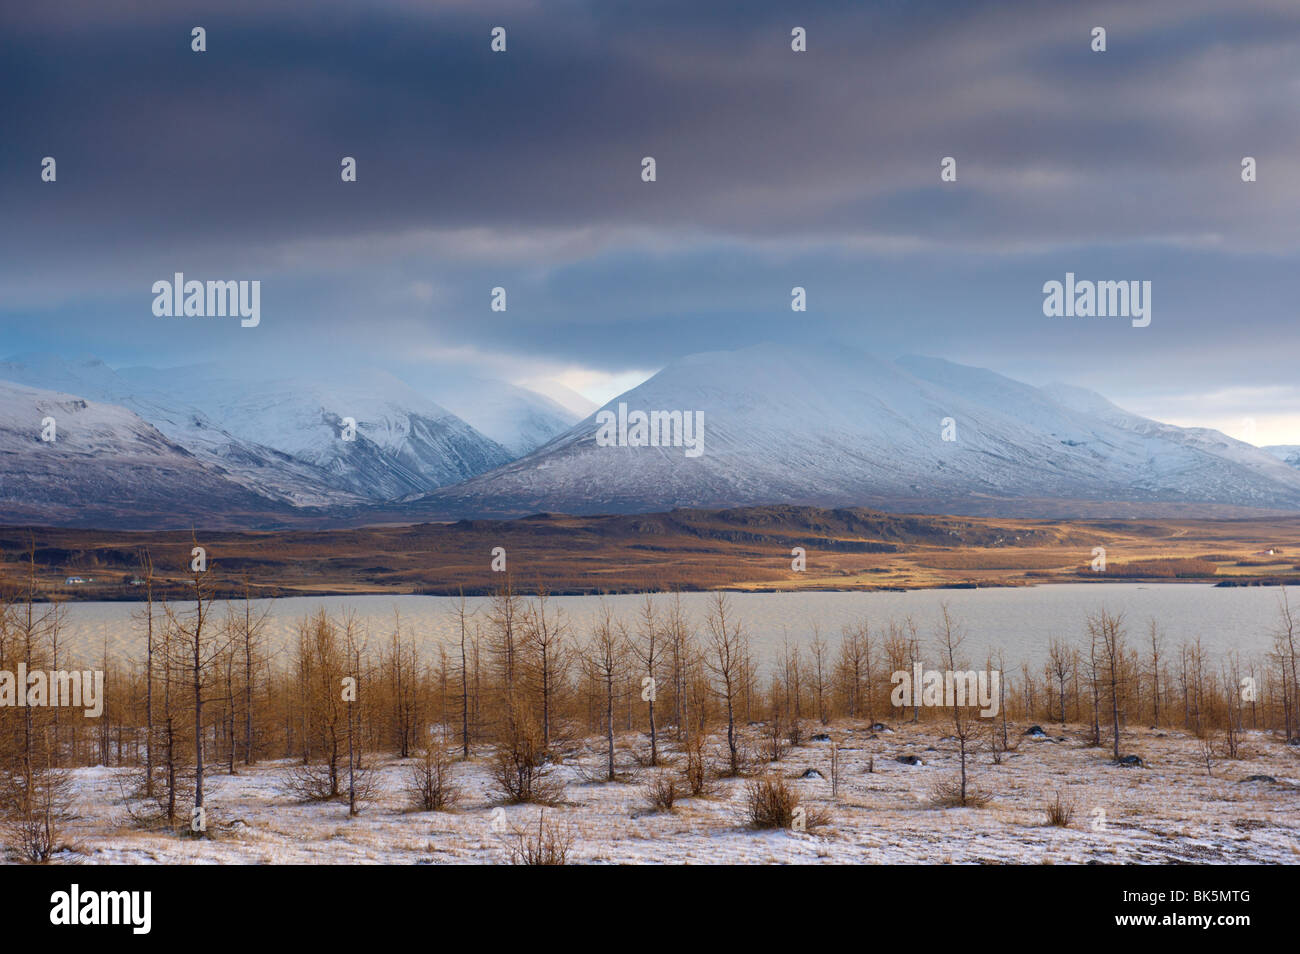 Egilsstadir iceland immagini e fotografie stock ad alta risoluzione - Alamy